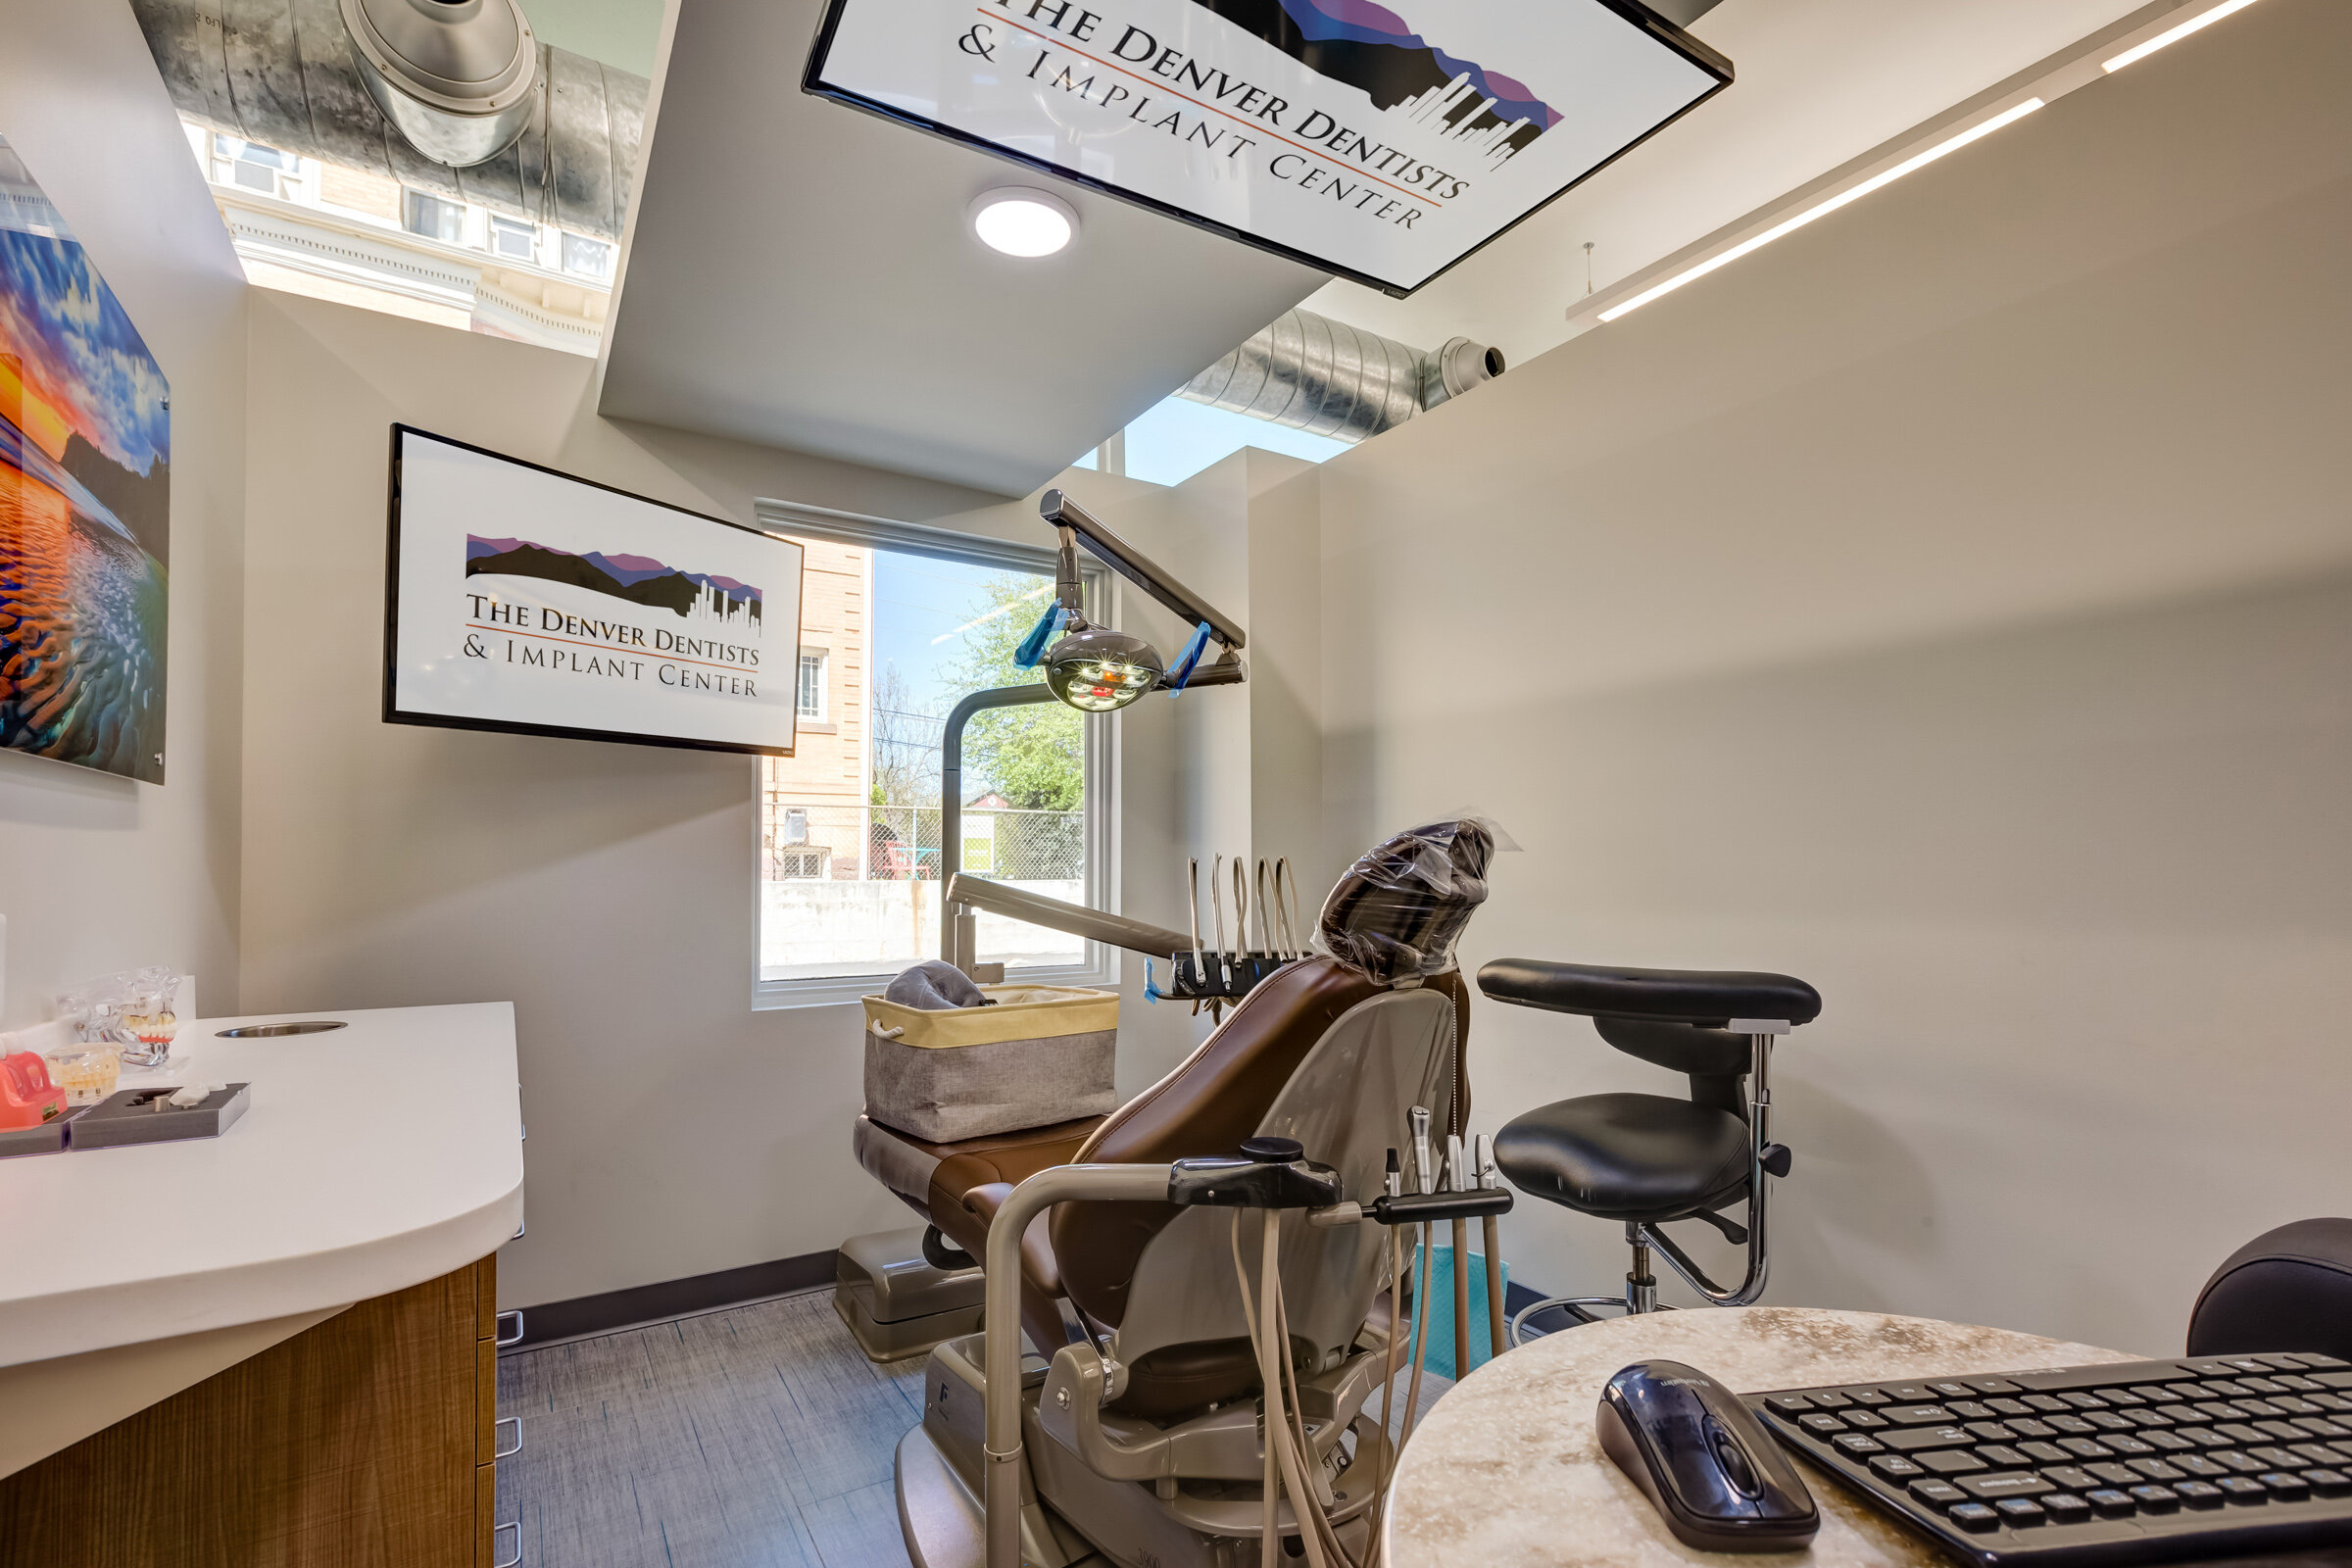 The Denver Dentists & Implant Center